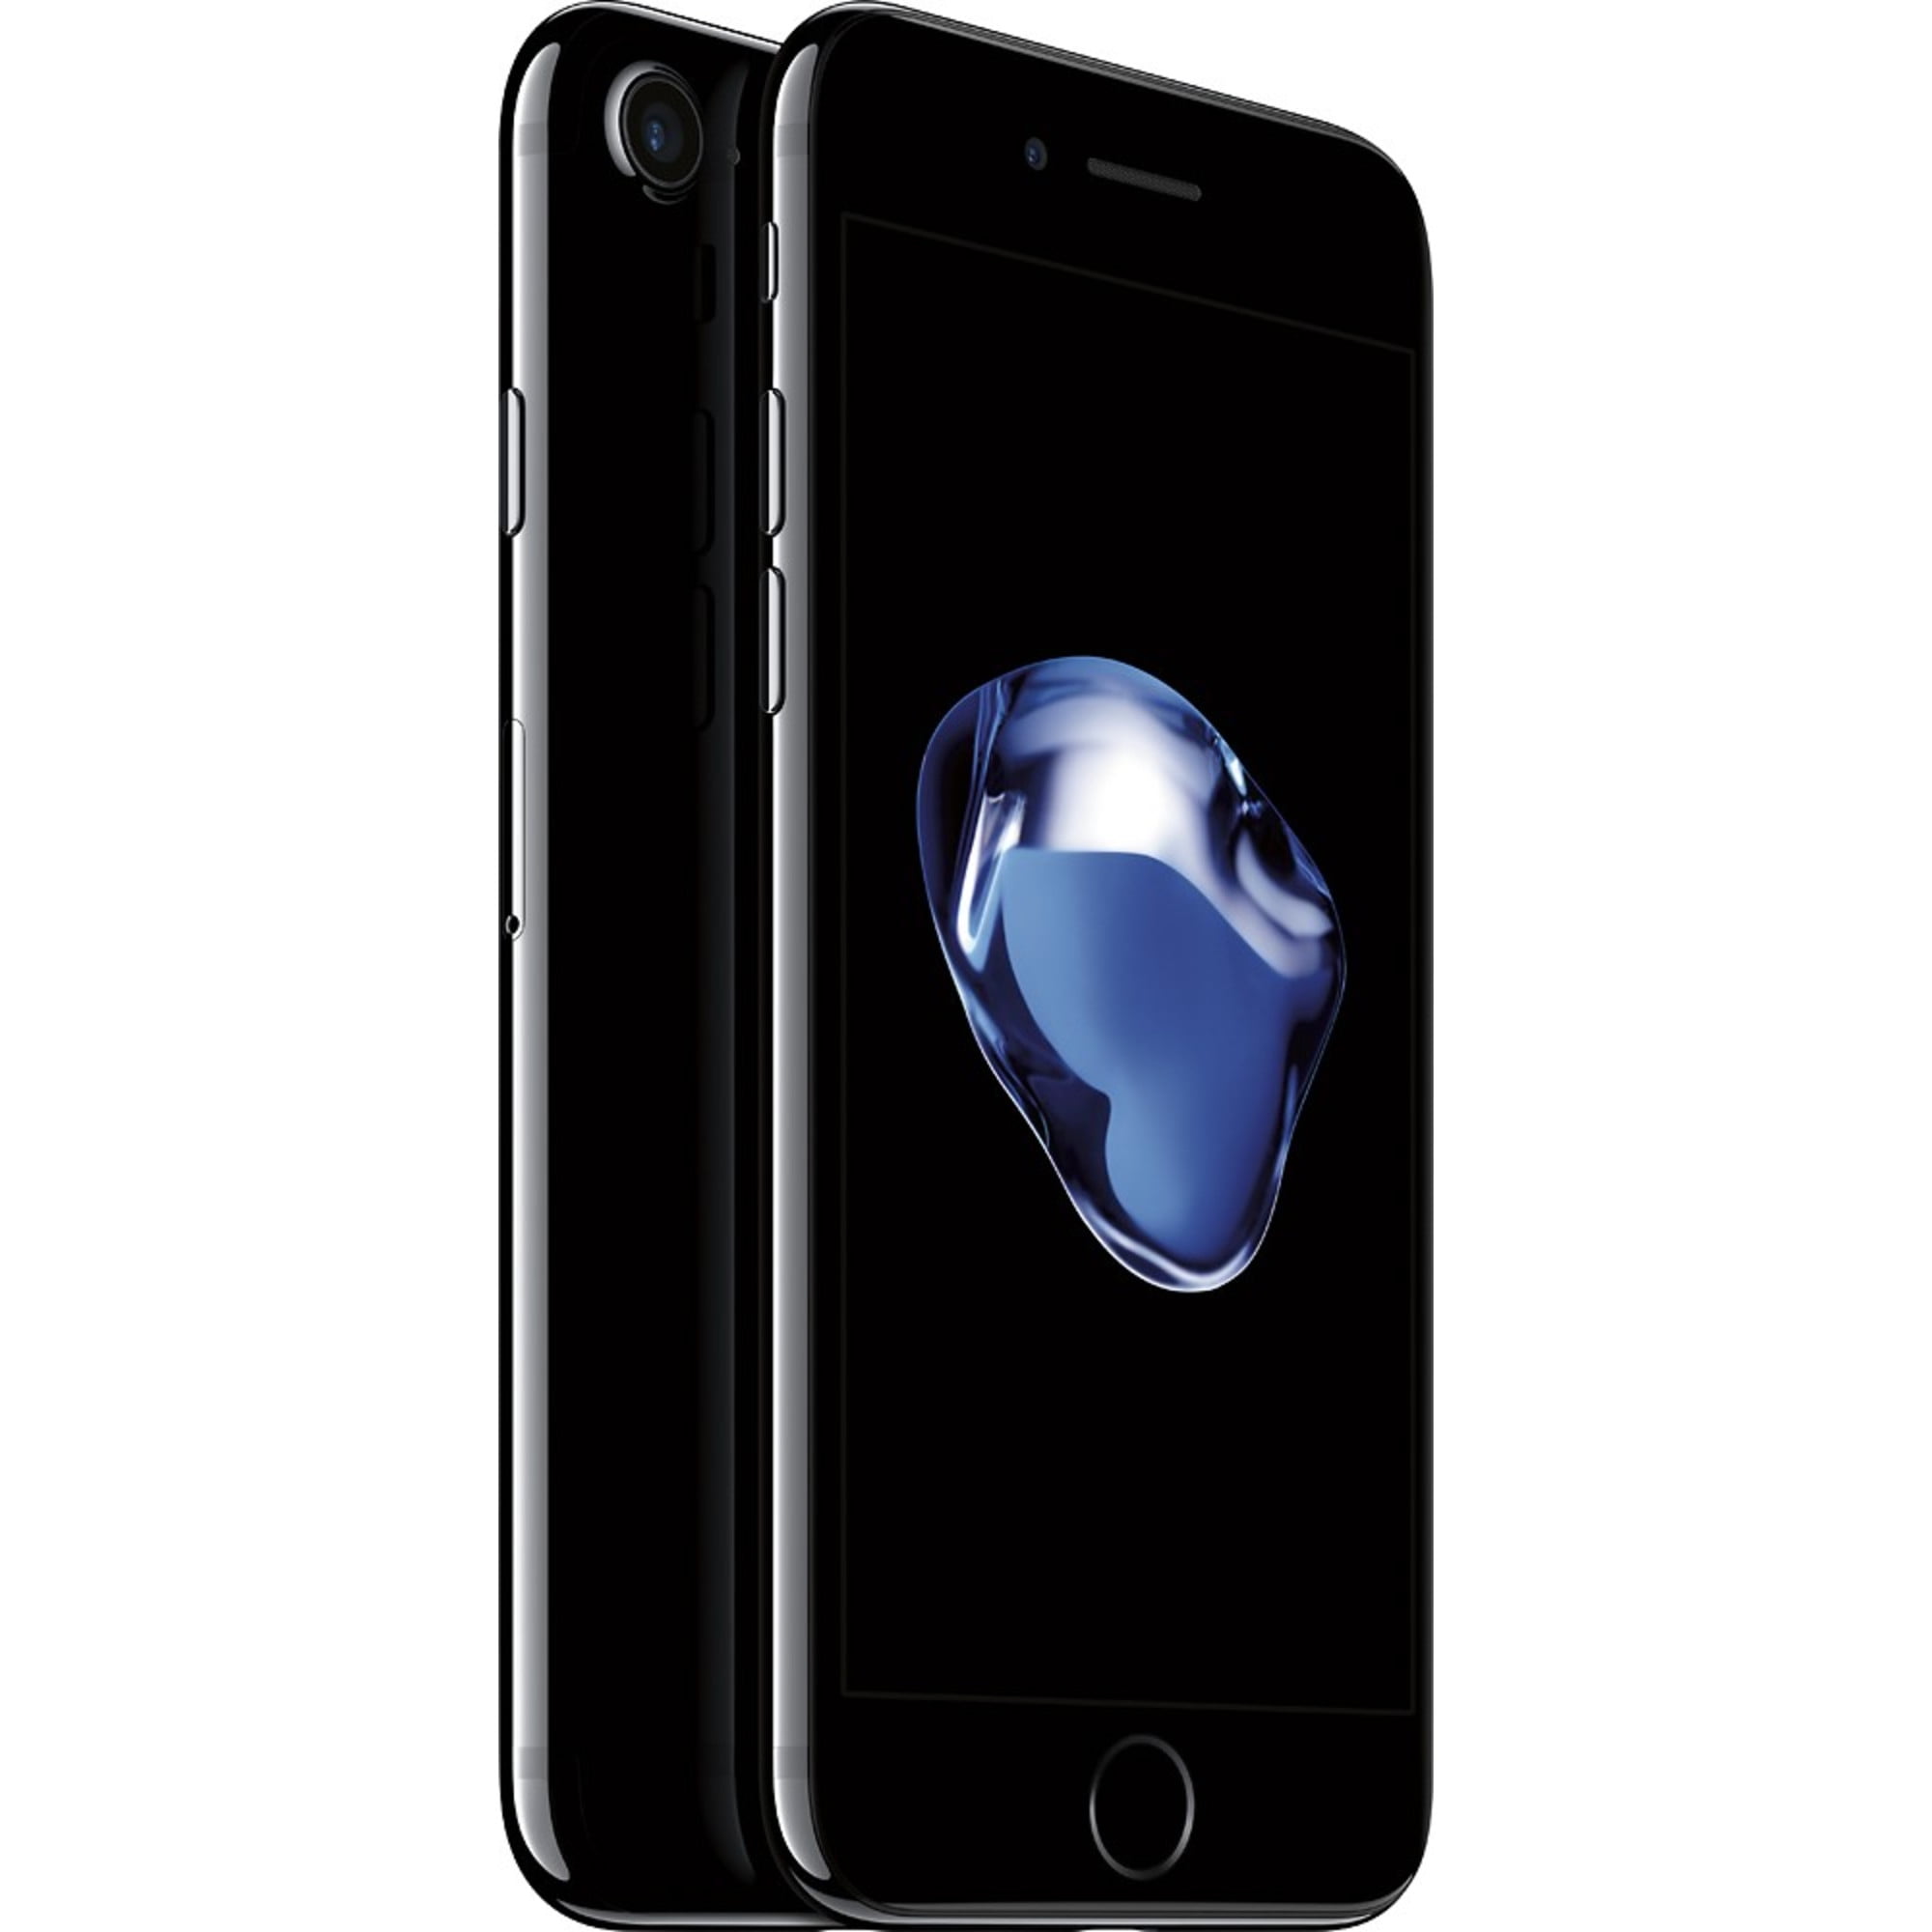 Pre-Owned Apple iPhone 7 32GB GSM Unlocked - Jet Black + Ting SIM 